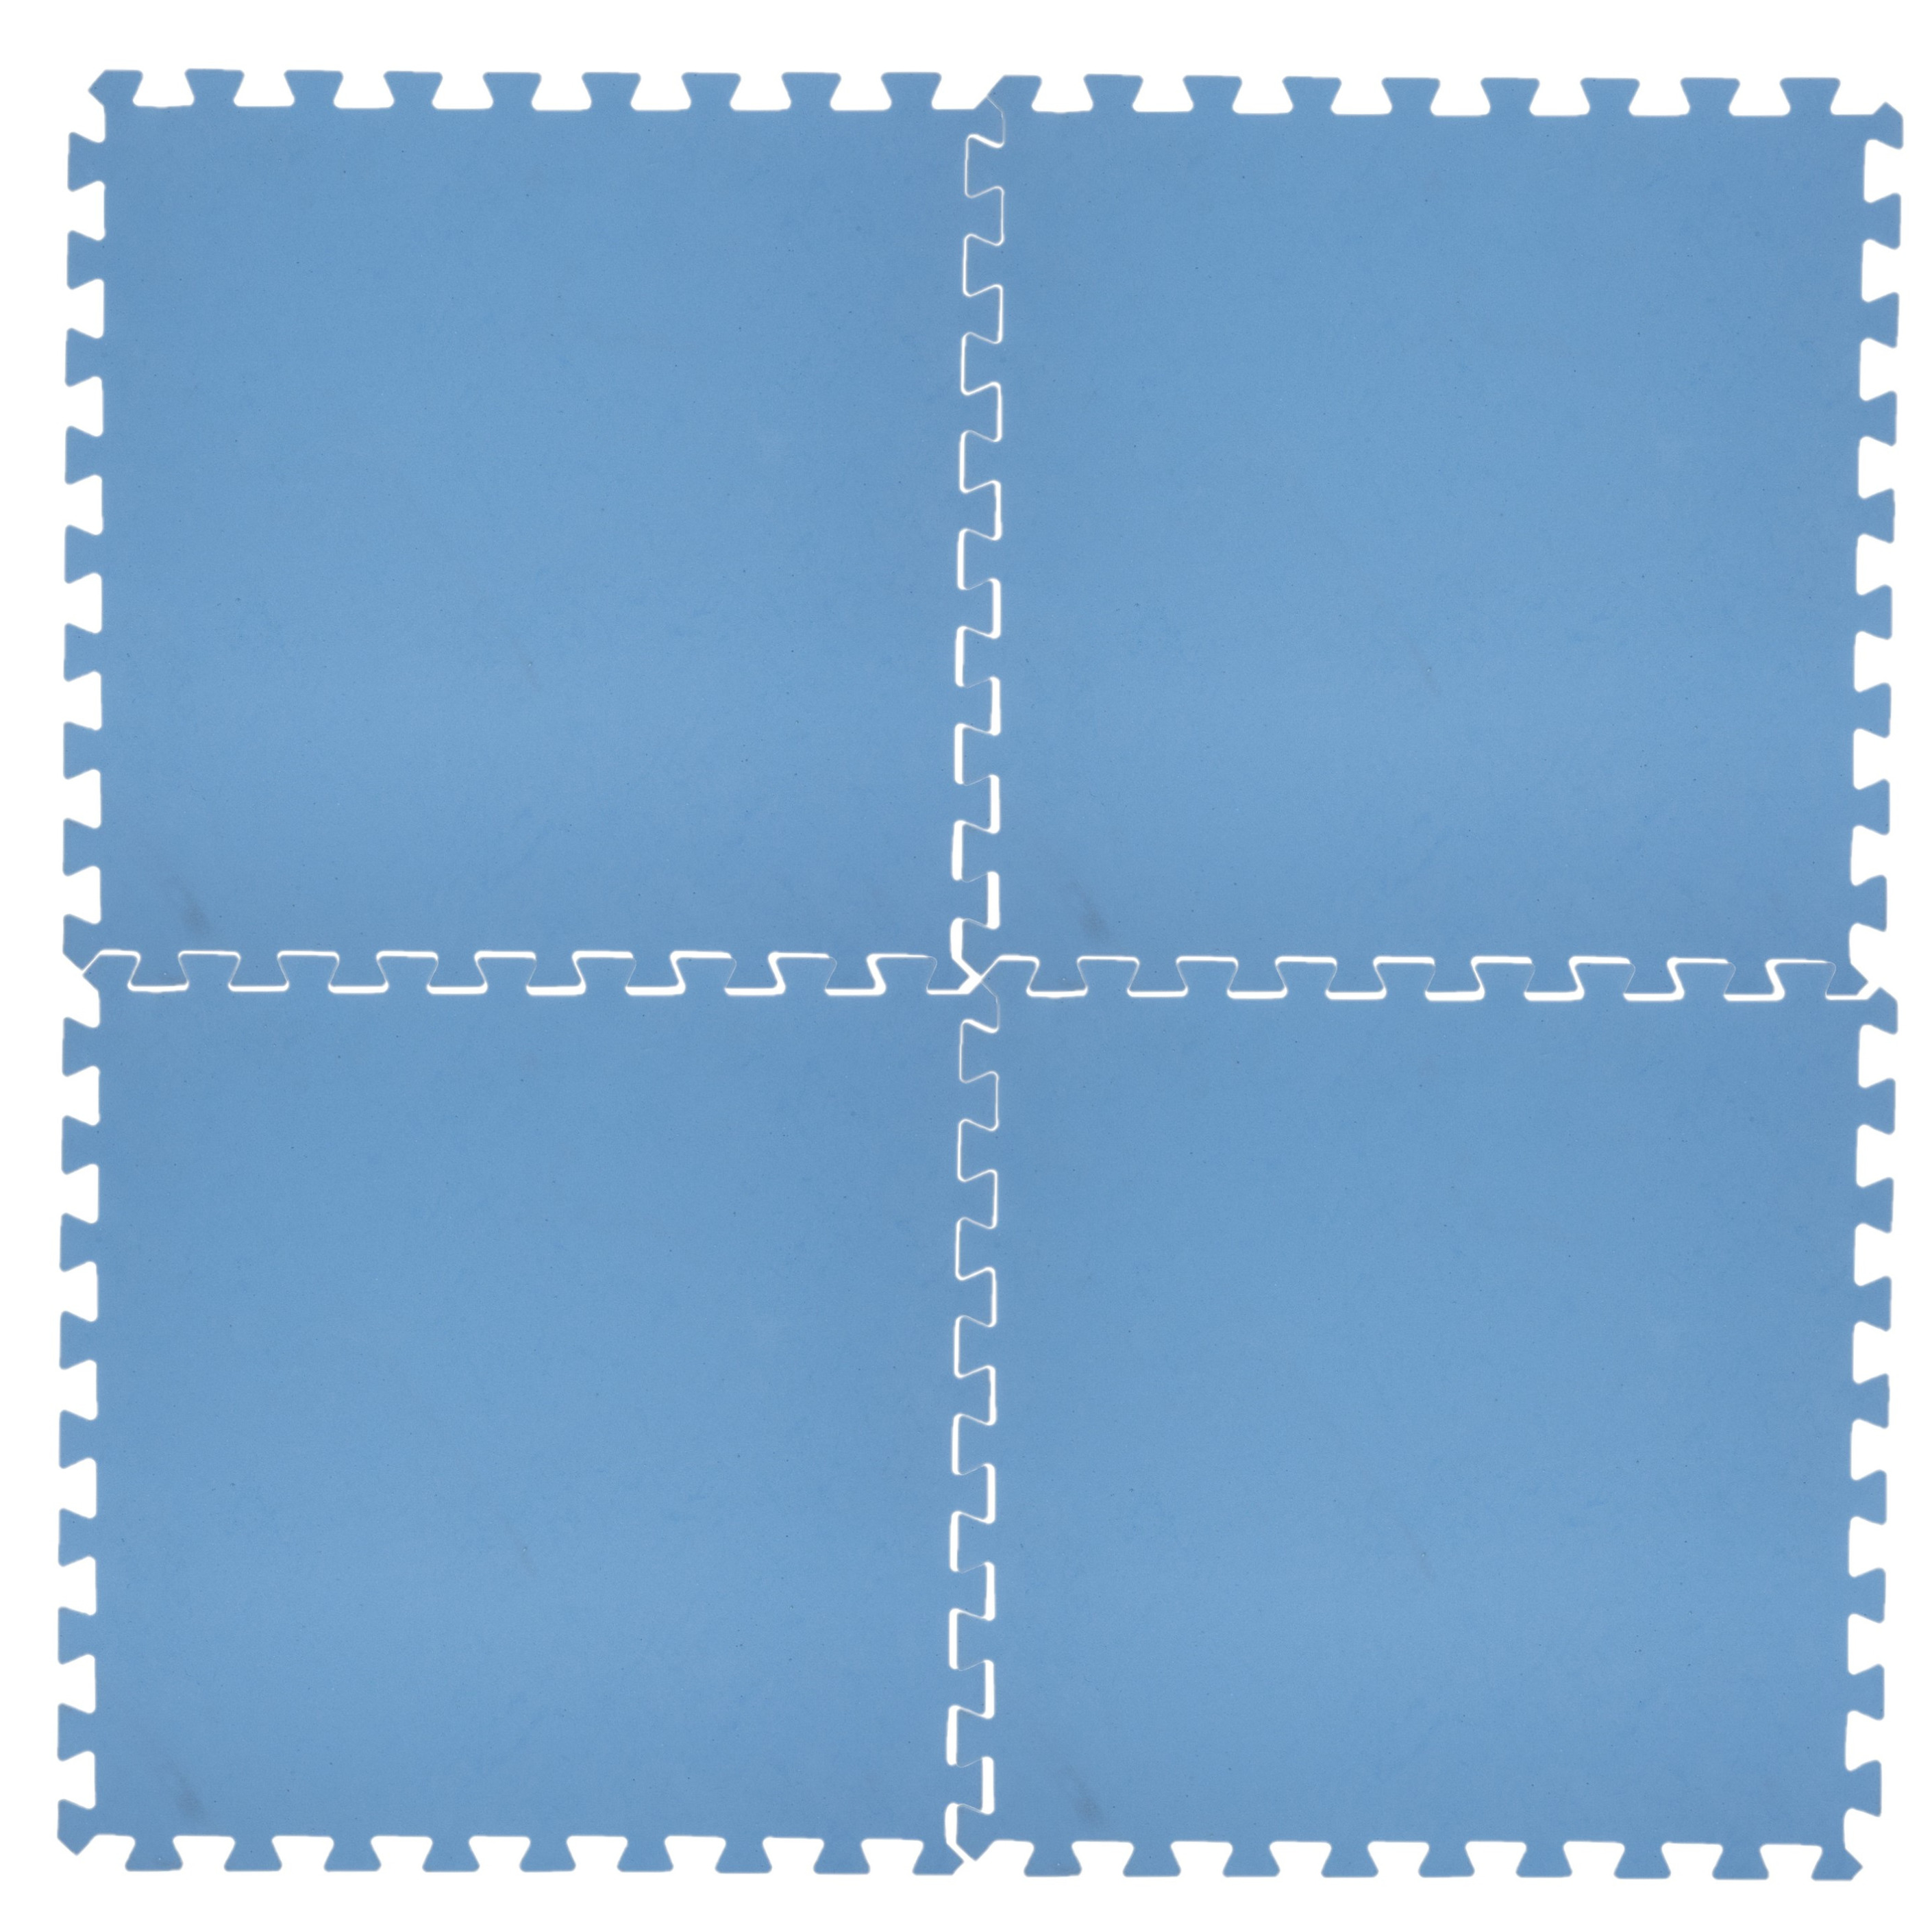 16x stuks Foam puzzelmat zwembadtegels/fitnesstegels blauw 50 x 50 cm